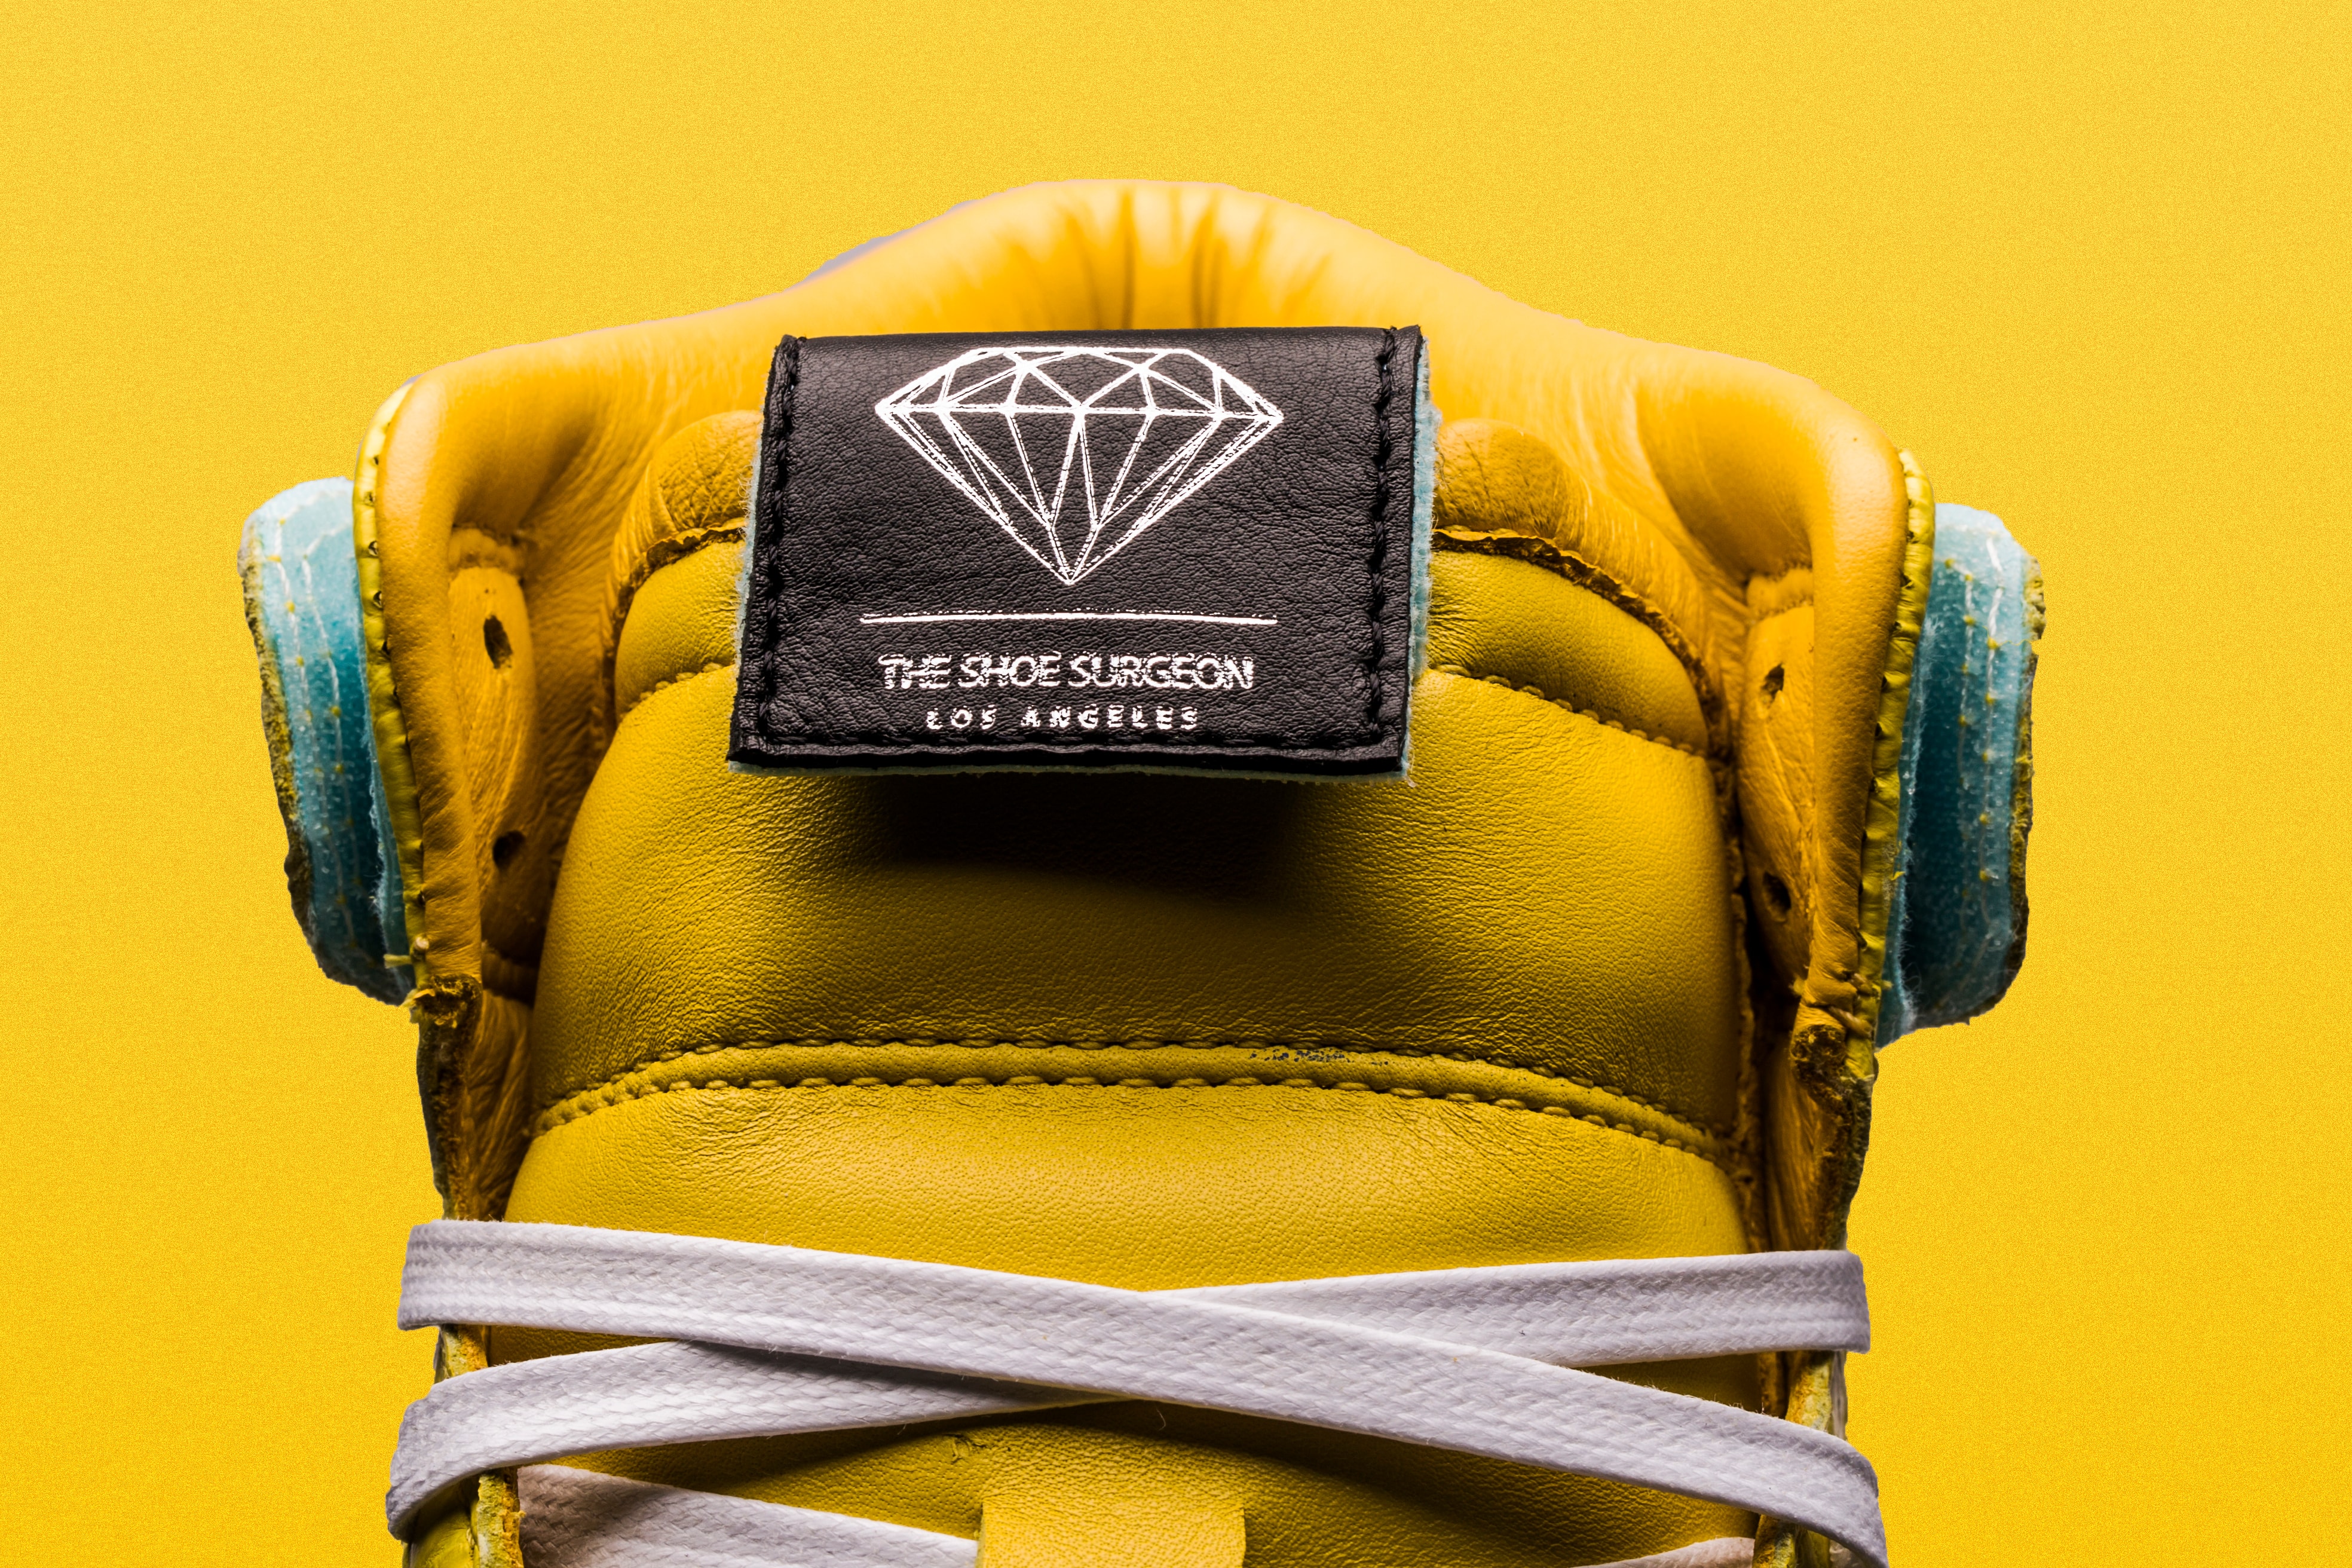 The Shoe Surgeon air jordan 1 nike canary yellow diamond supply co dunk low yellow sneaker drop release date info buy leather remake custom bespoke handmade